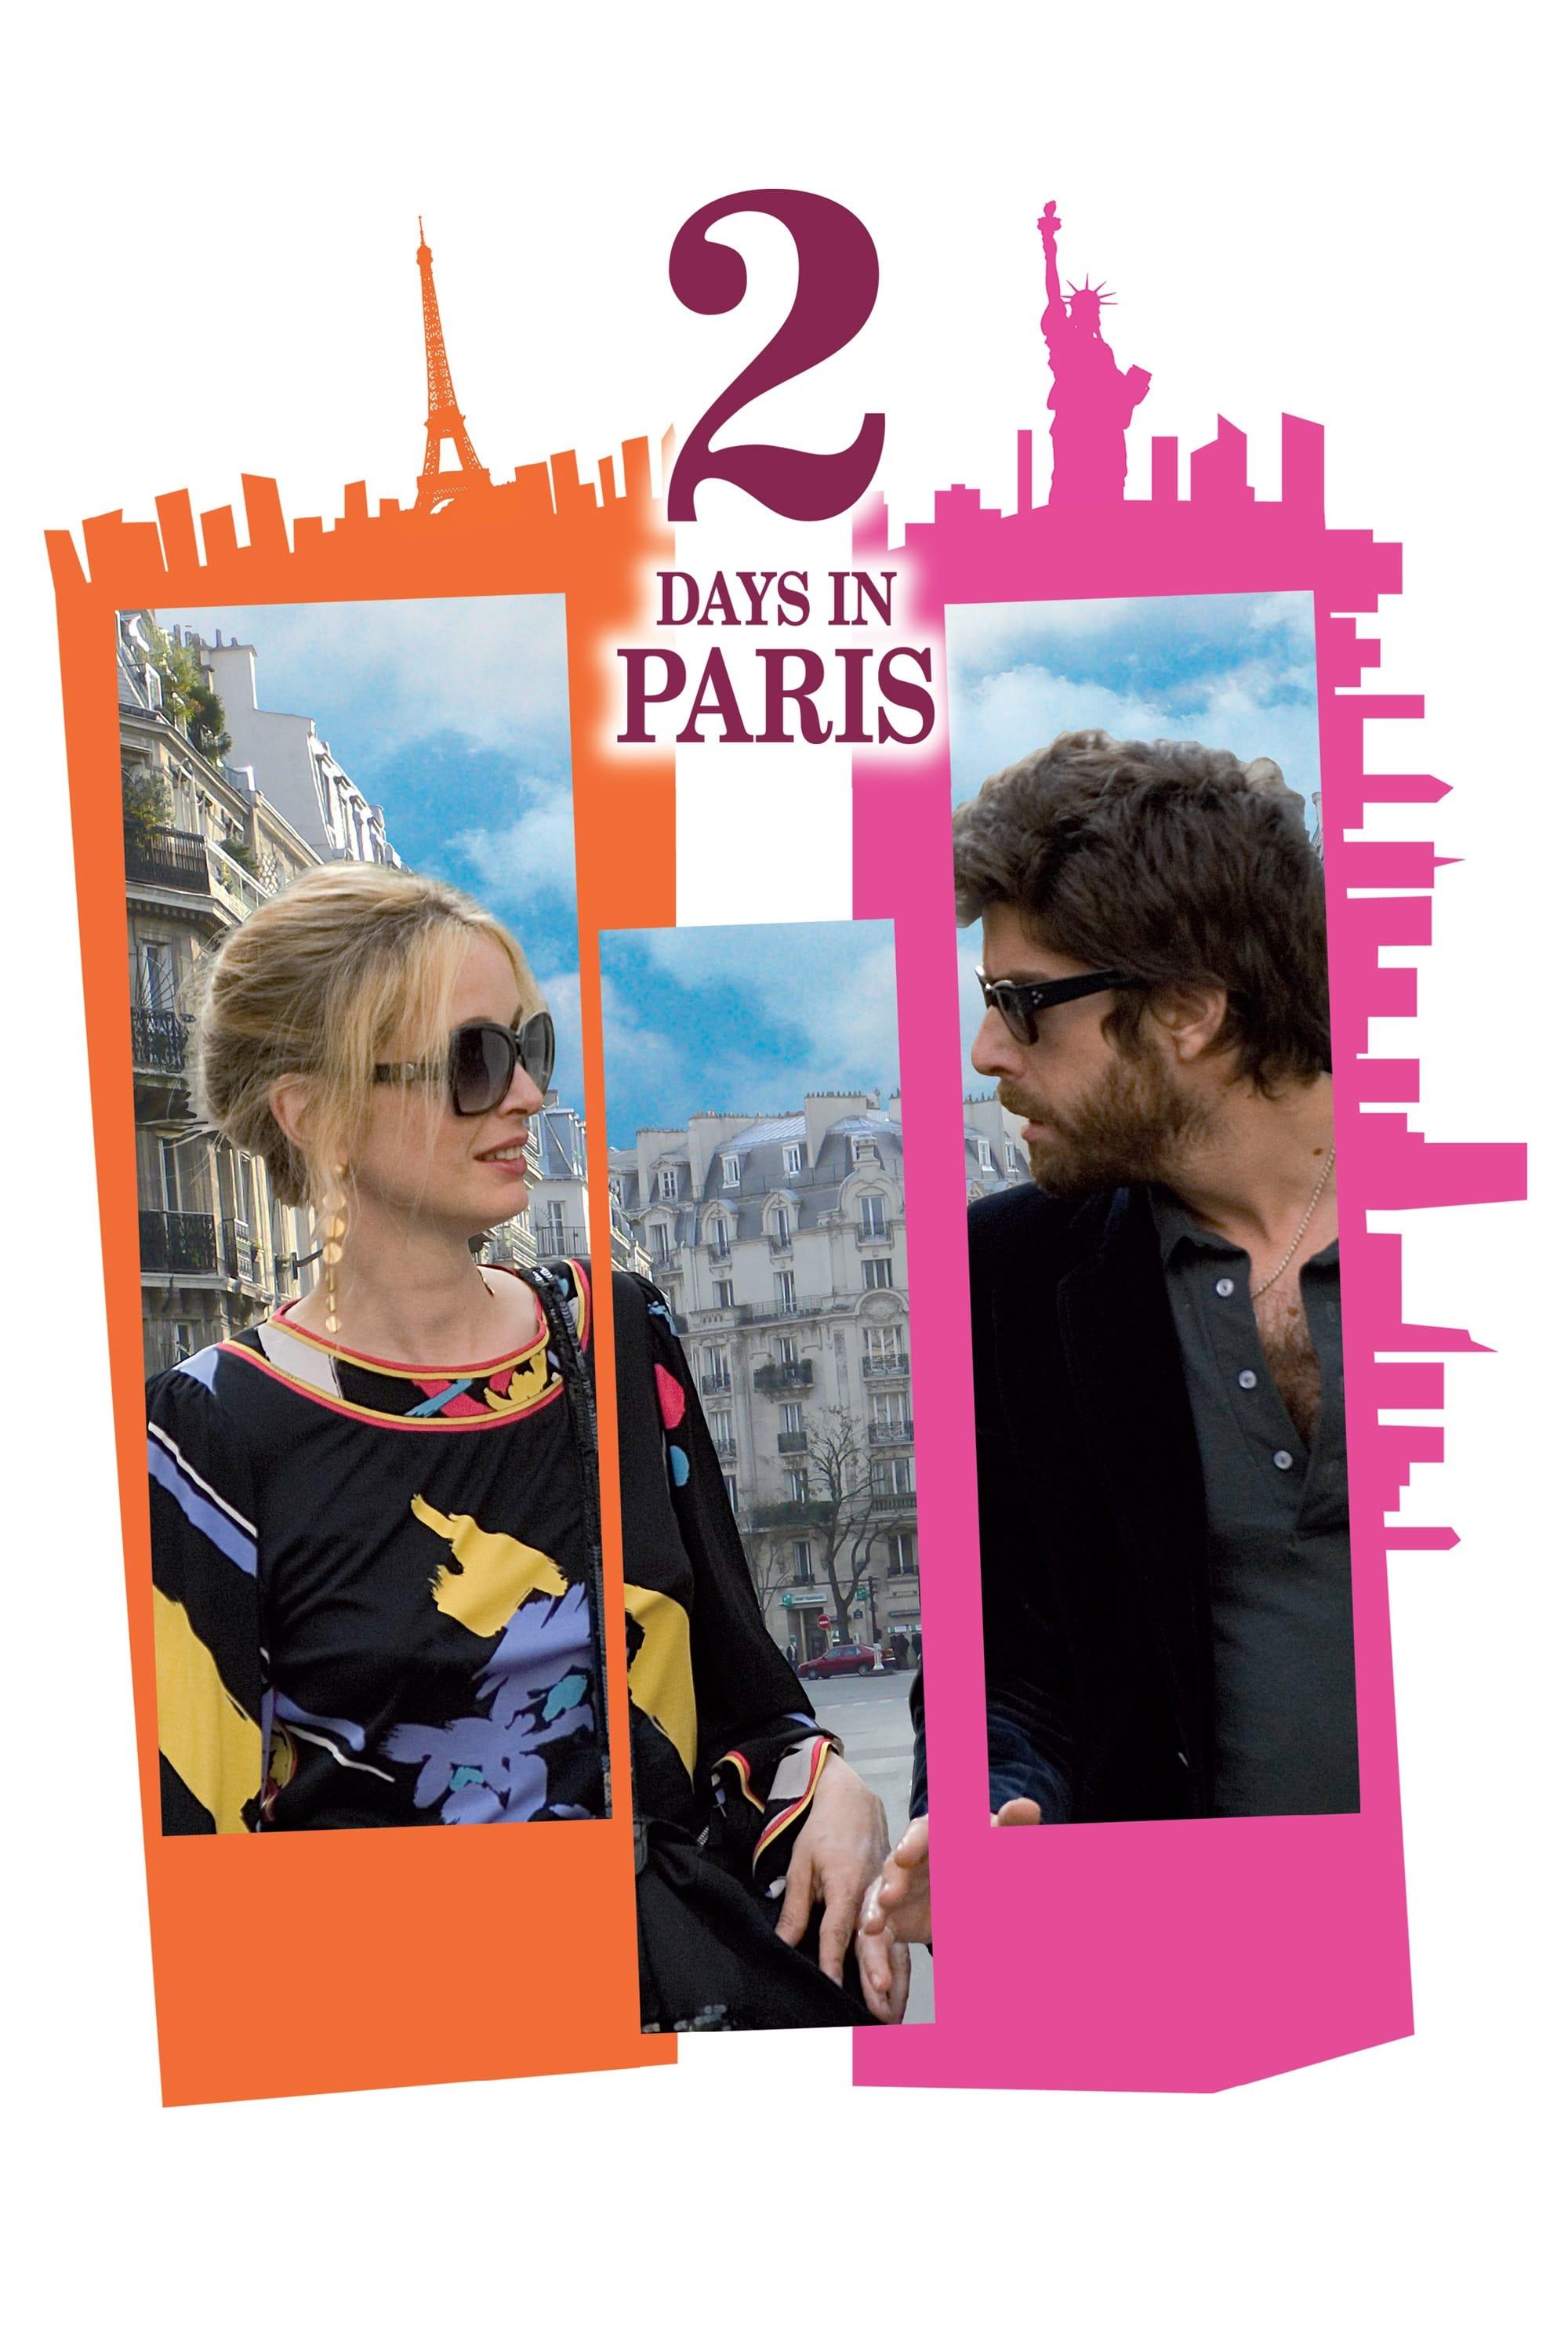 2 Days in Paris poster